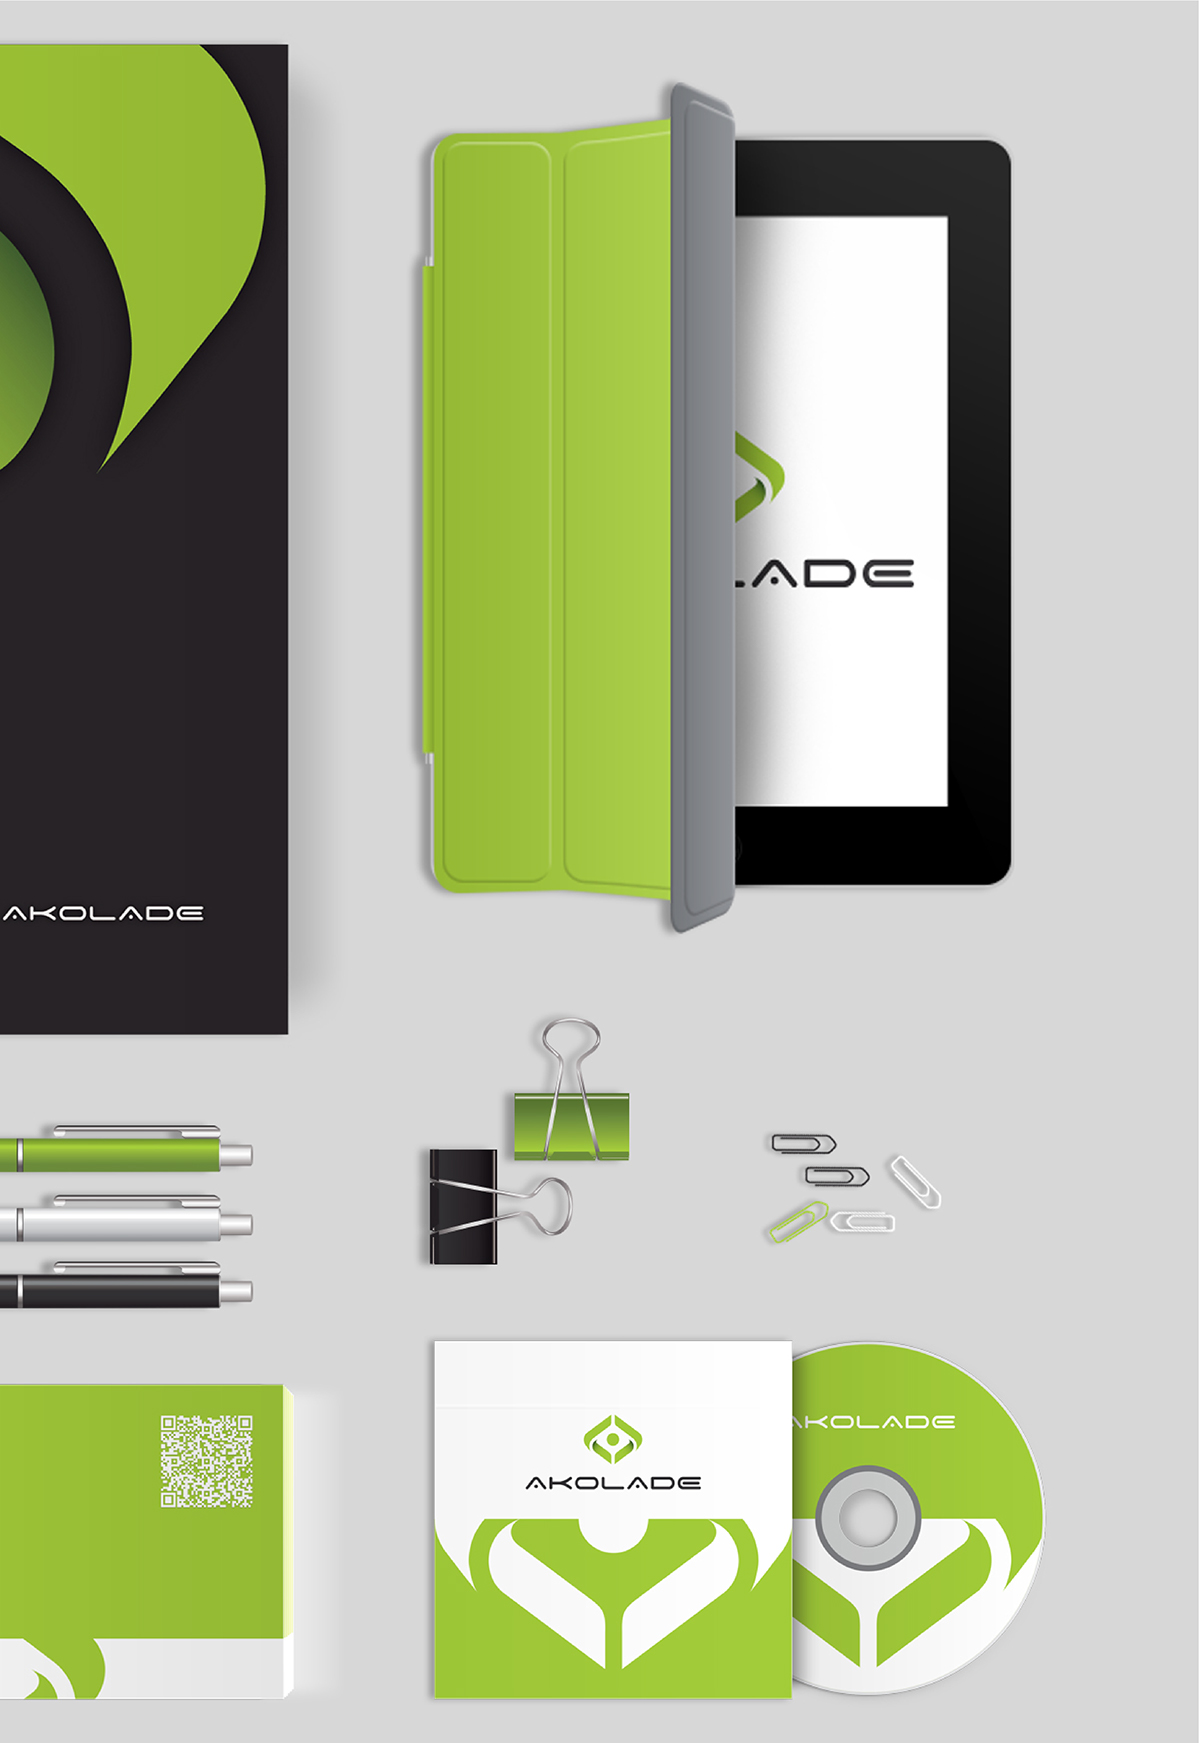 Corporate Identity logo stationary Web business card envelope letterhead folder presentation flyer minicards